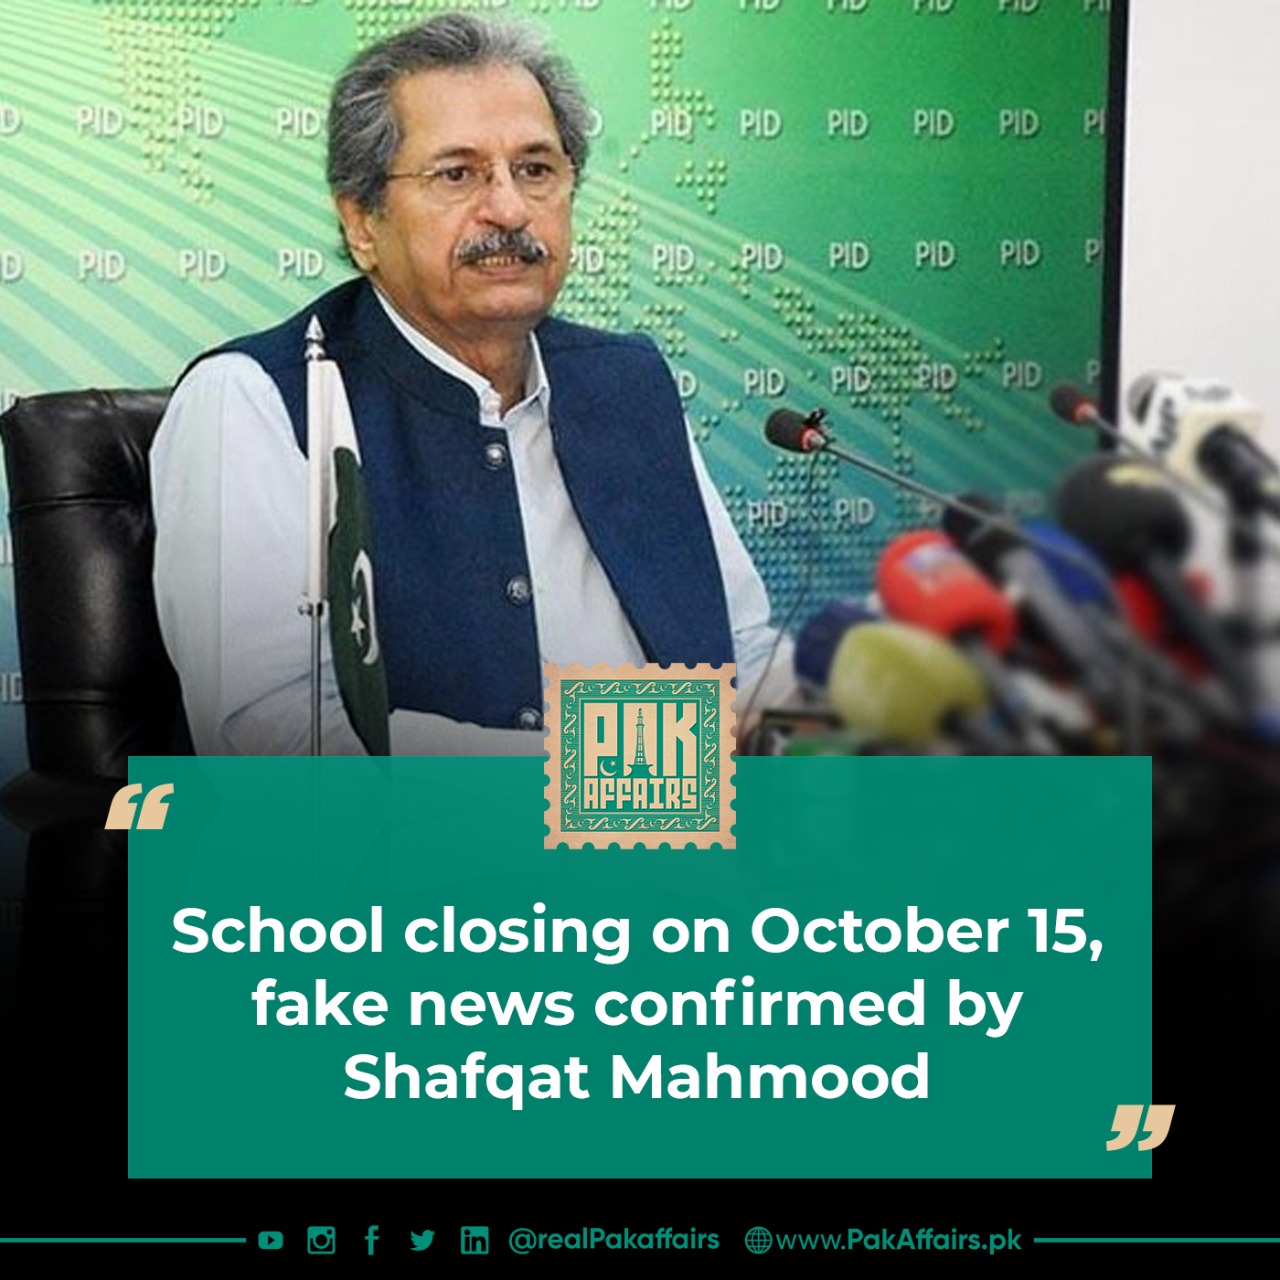 School closing on October 15, fake news confirmed by Shafqat Mahmood